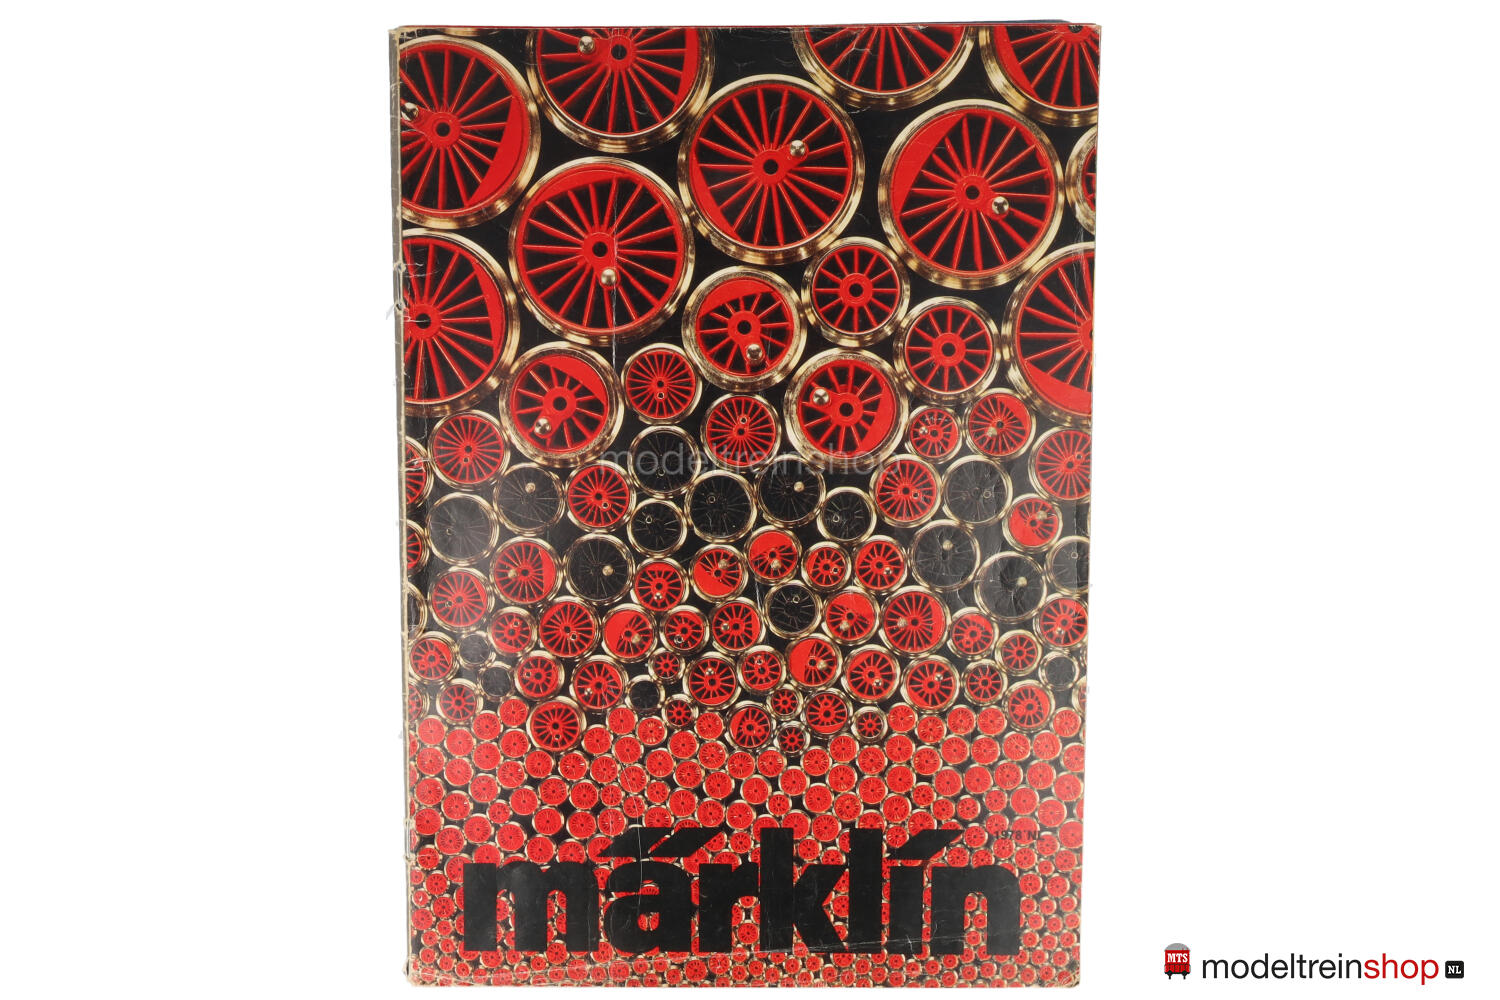 Marklin Catalogus 1978 - Nederlandse Uitgave met prijslijst - Modeltreinshop